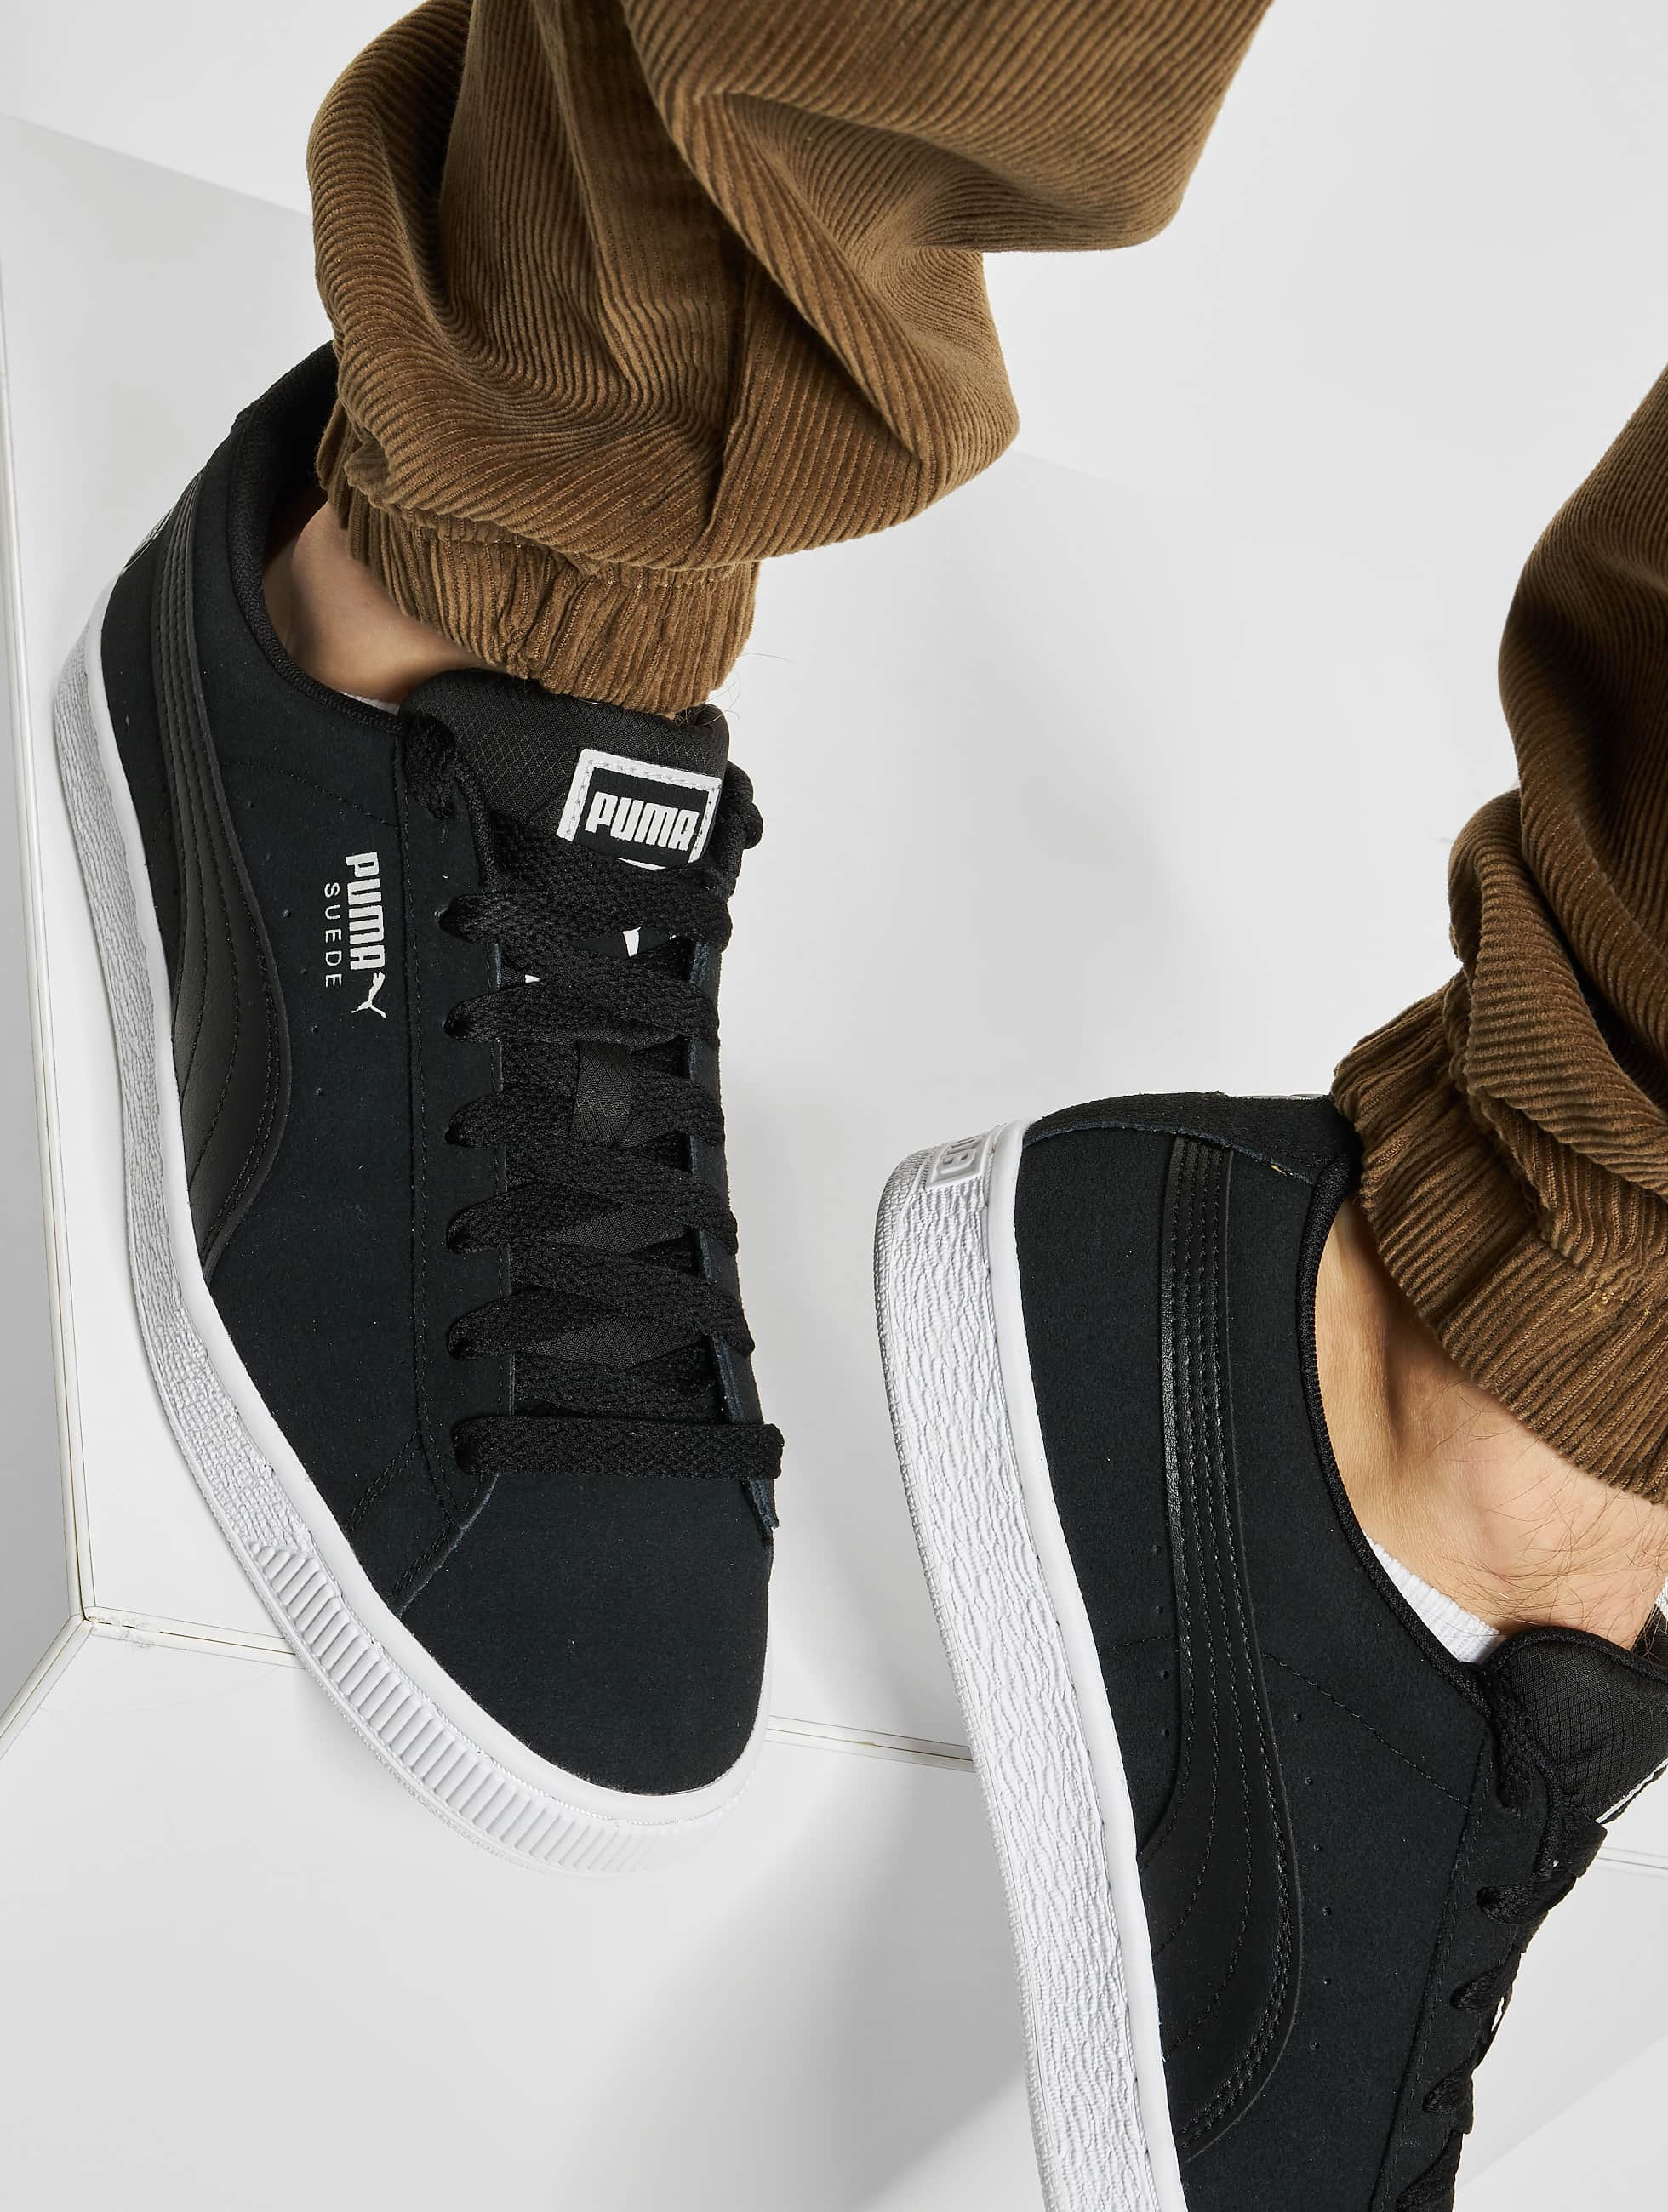 Puma Sko / Sneakers Re:Style i sort